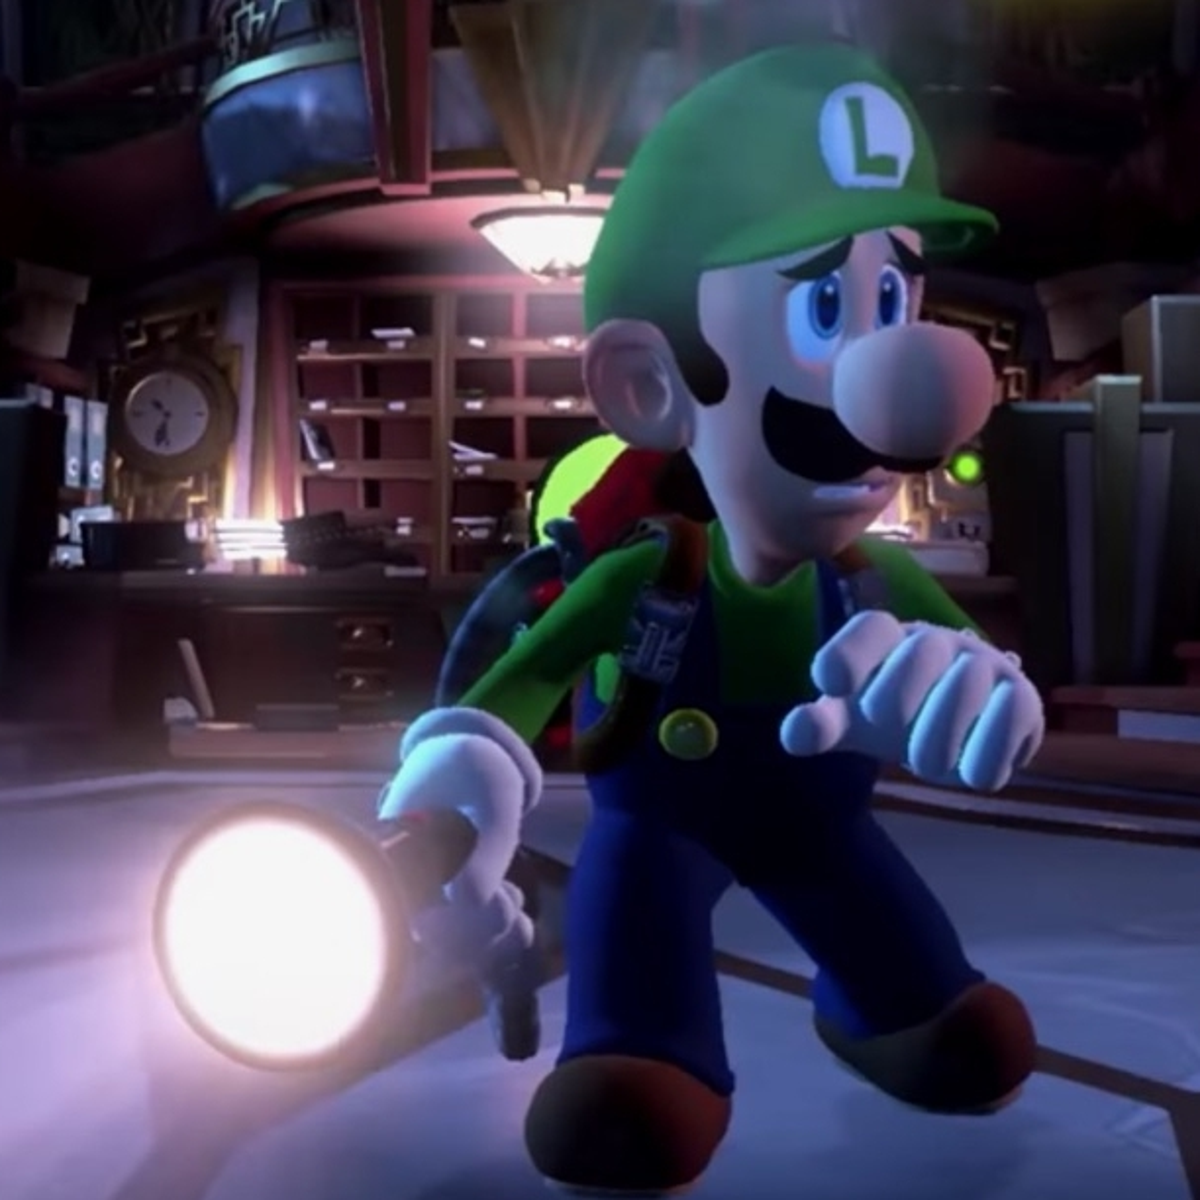 Luigi's Mansion 3 announced for Nintendo Switch